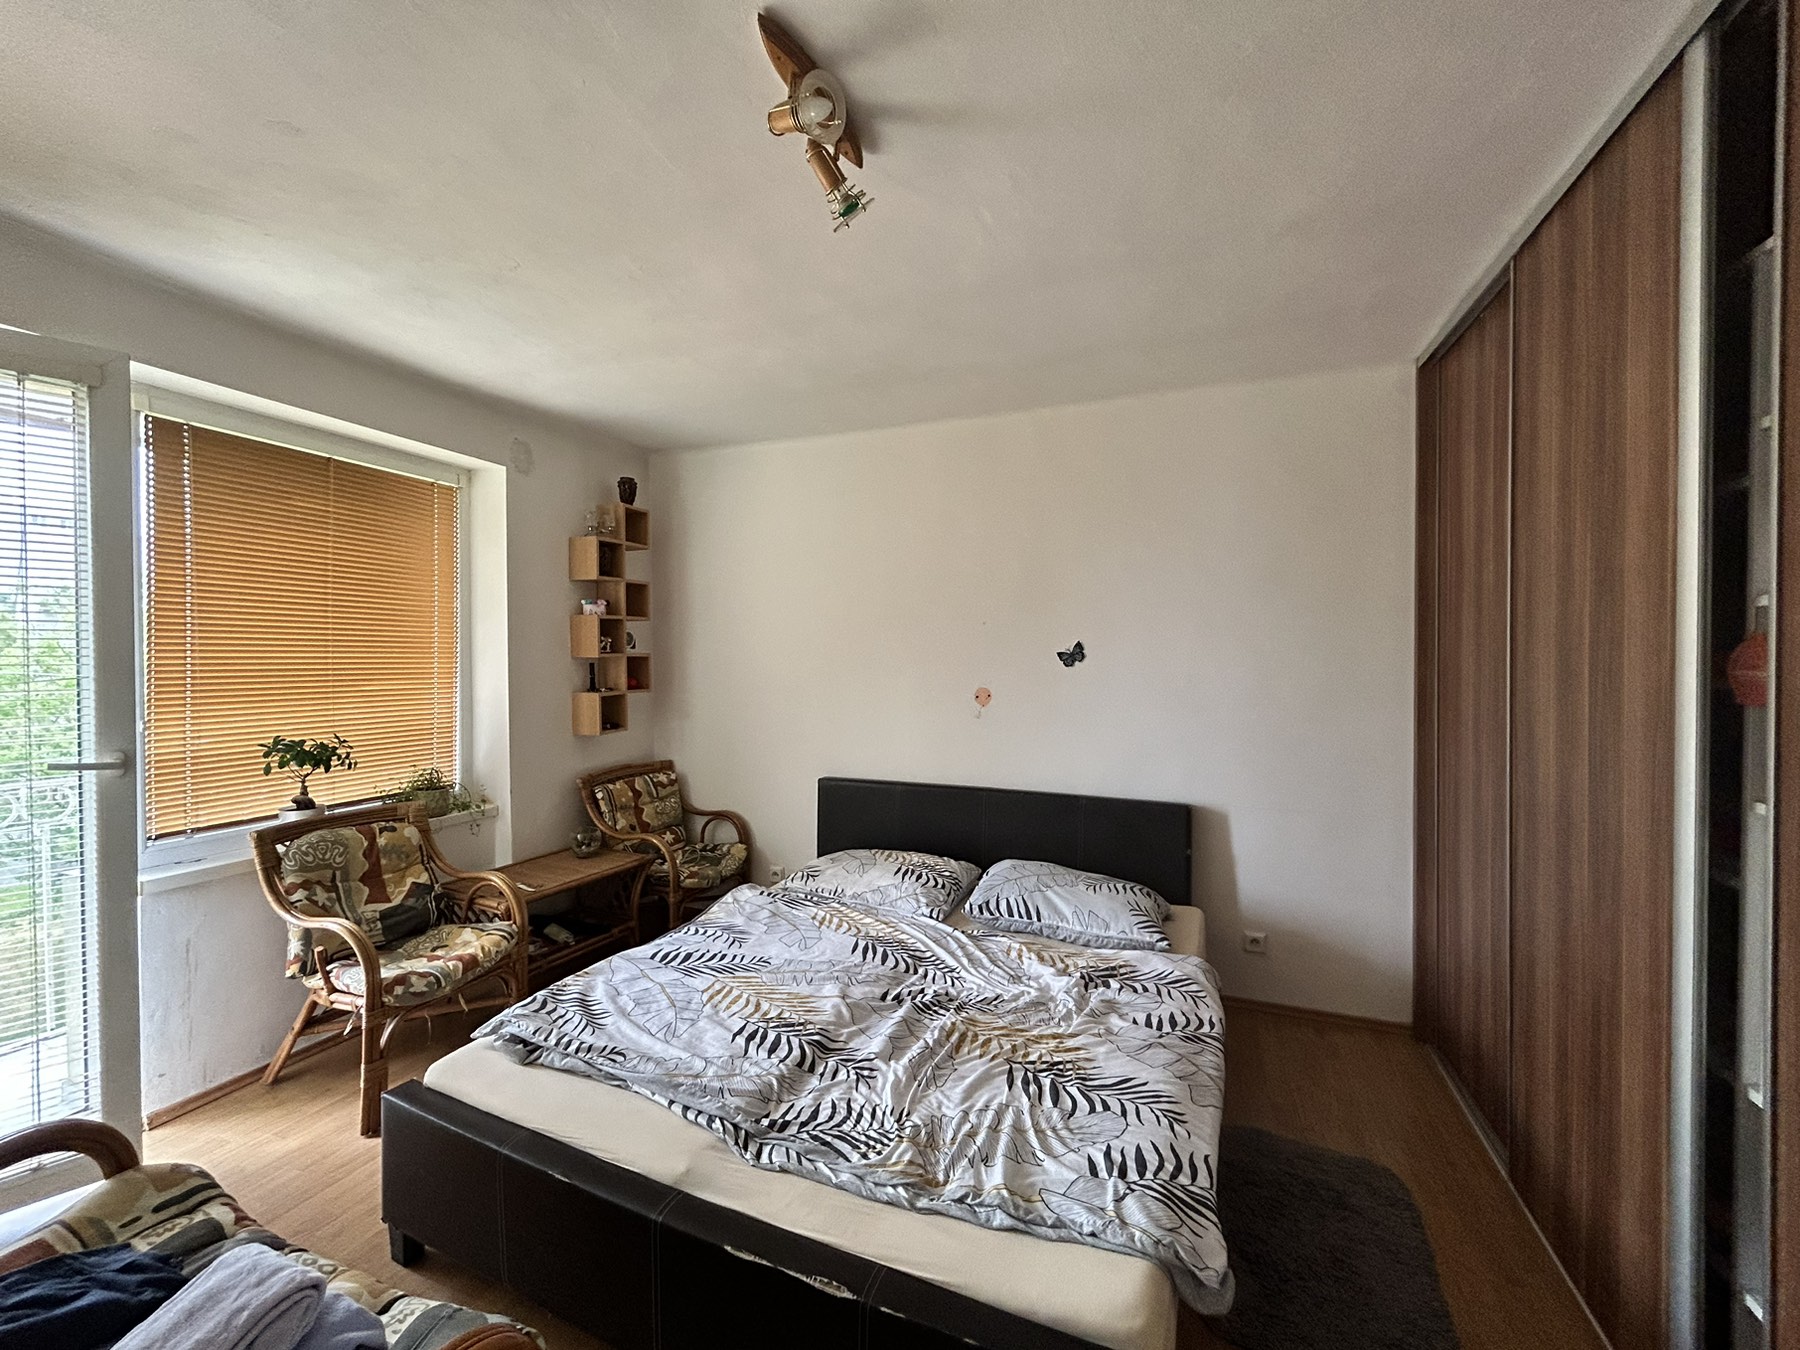 3-izbový byt v centre mesta Trebišov